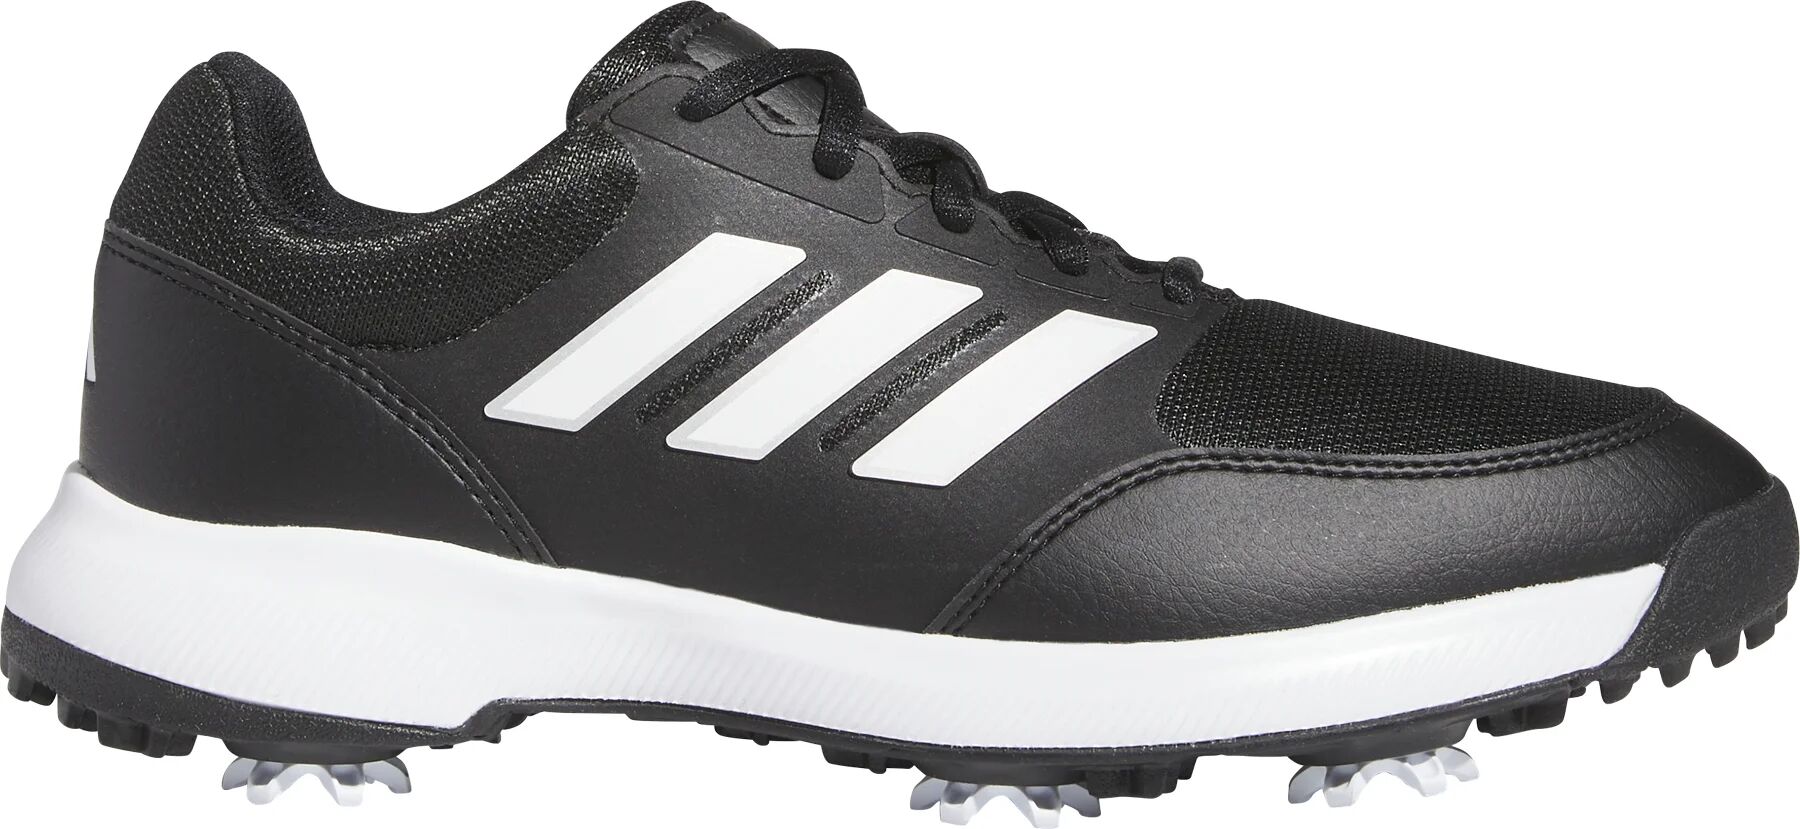 adidas Womens Tech Response 3.0 Golf Shoes - Core Black/Cloud White/Silver Metallic - 9 - MEDIUM